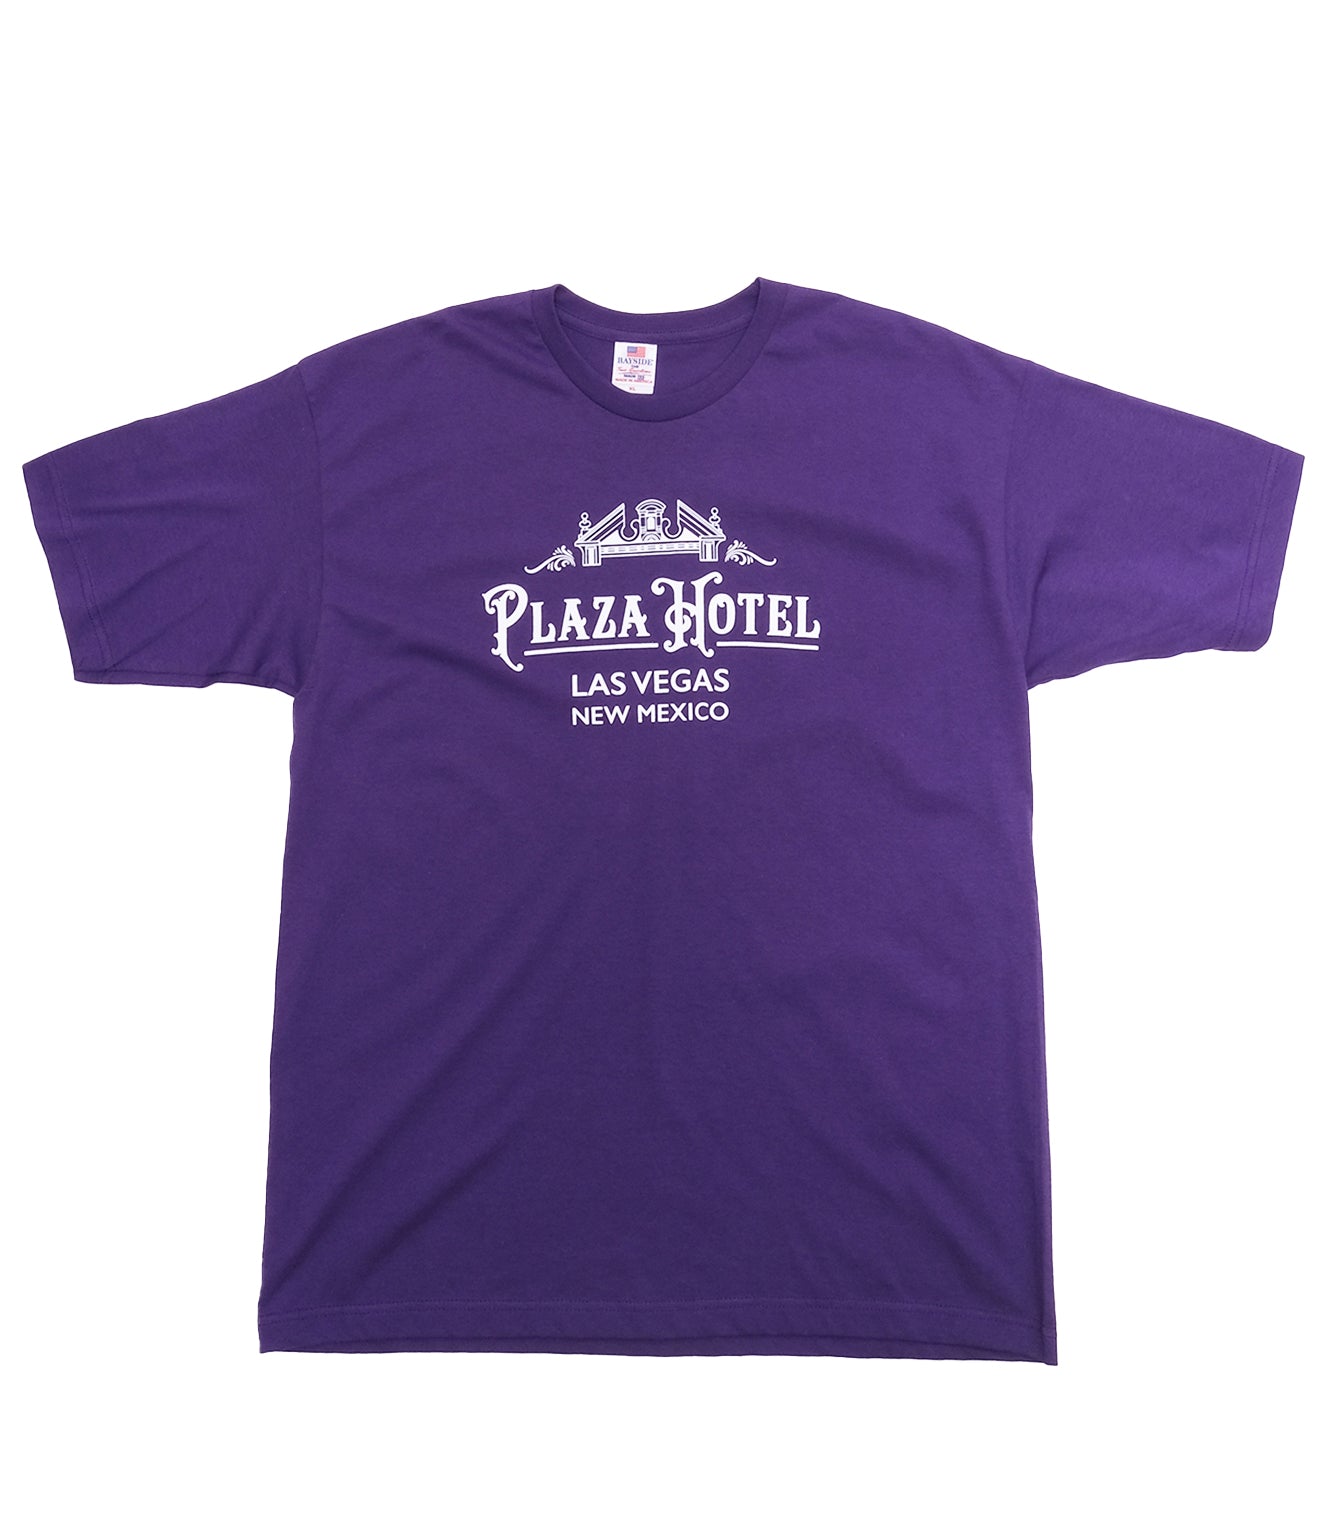 New mexico "PLAZA HOTEL Souvenir Tee" (Purple)